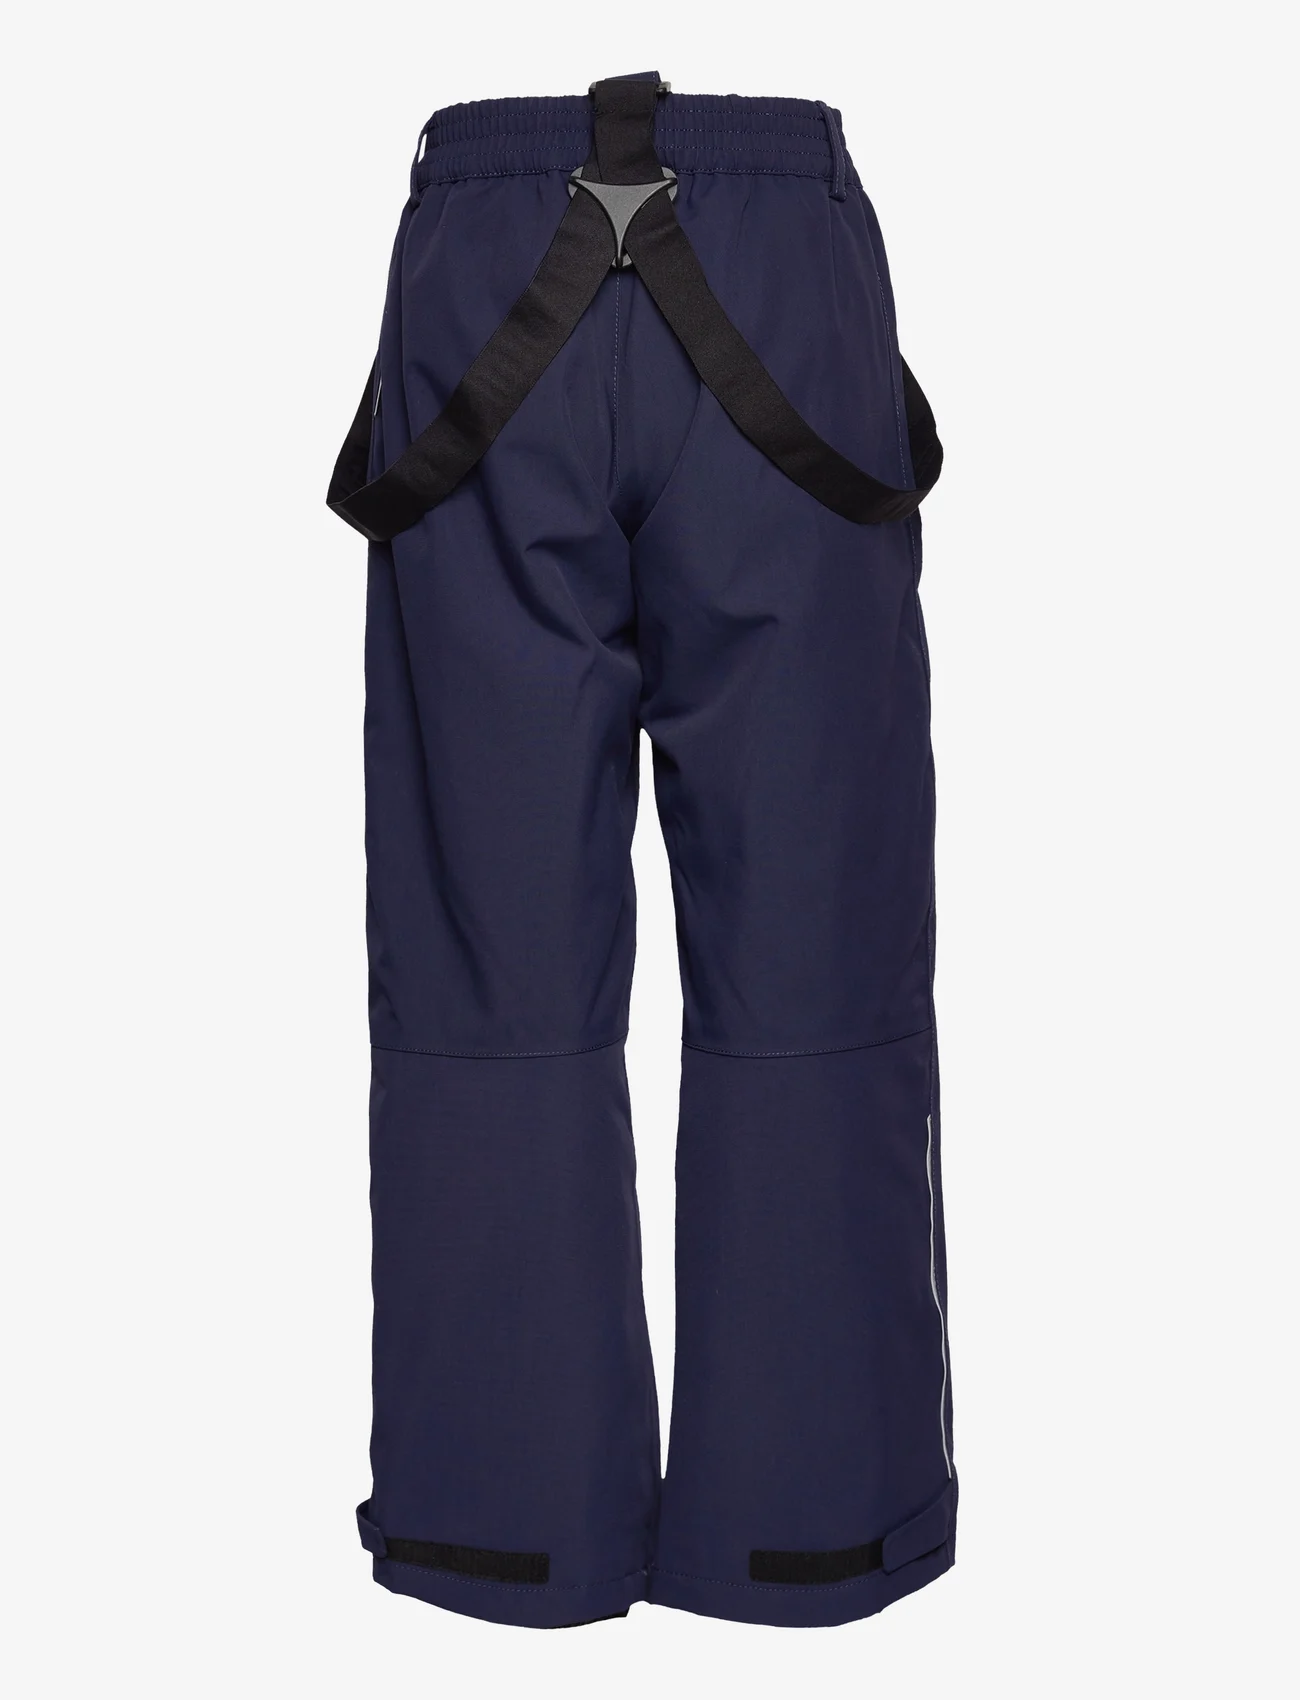 Reima - Reimatec winter pants, Loikka - bottoms - navy - 1